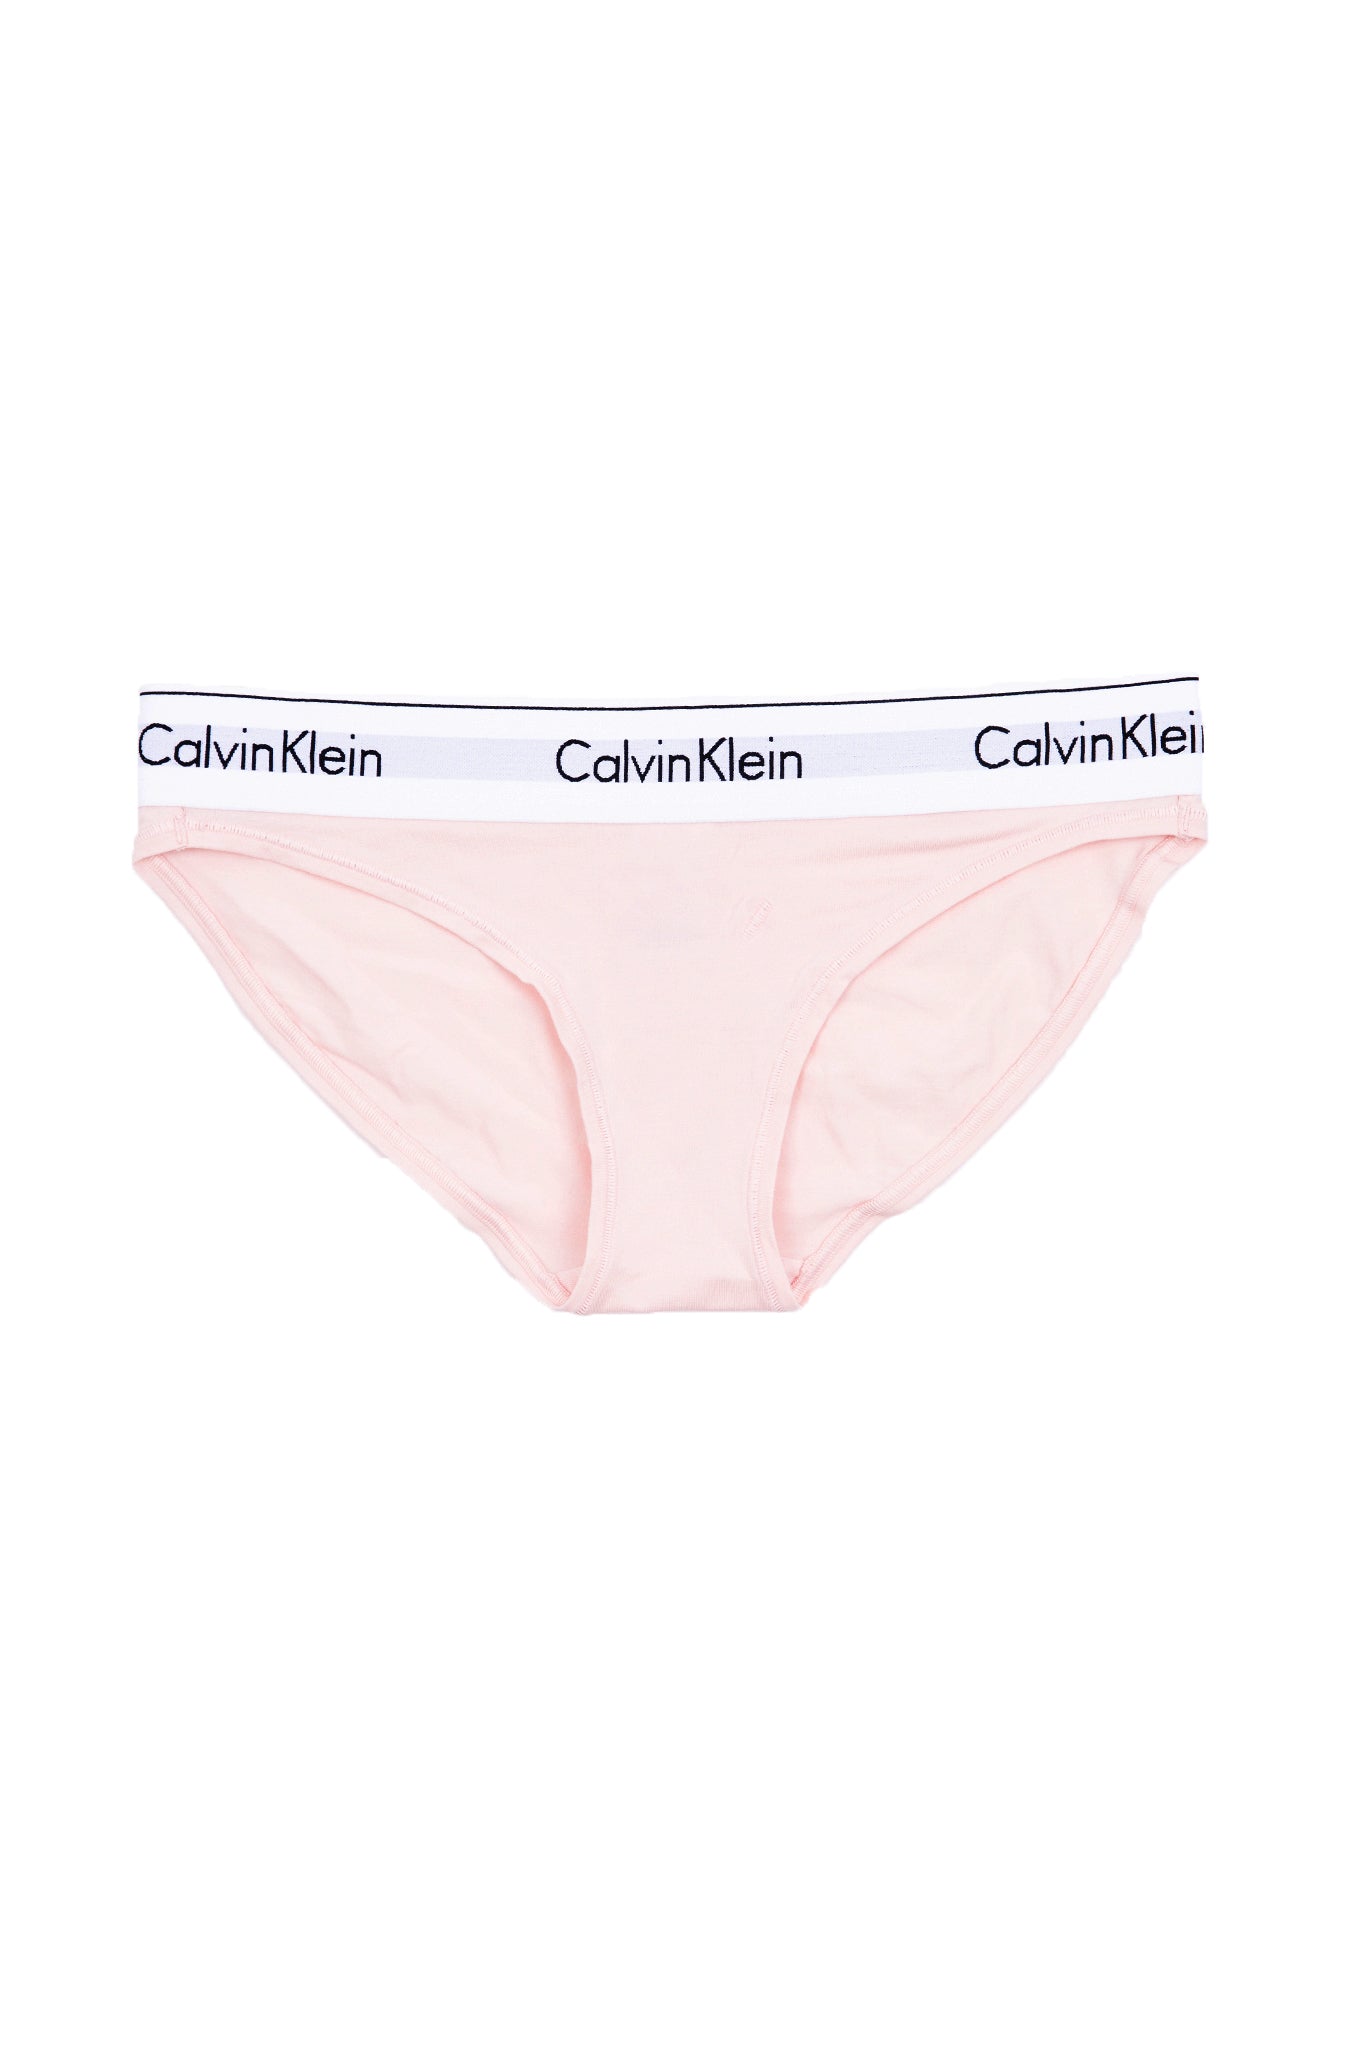 https://cdn.shopify.com/s/files/1/0269/2277/8677/files/Calvin-Klein-Modern-Cotton-Bikini-Bottom-Nymphs-Thigh-1.jpg?v=1687558728&width=1365